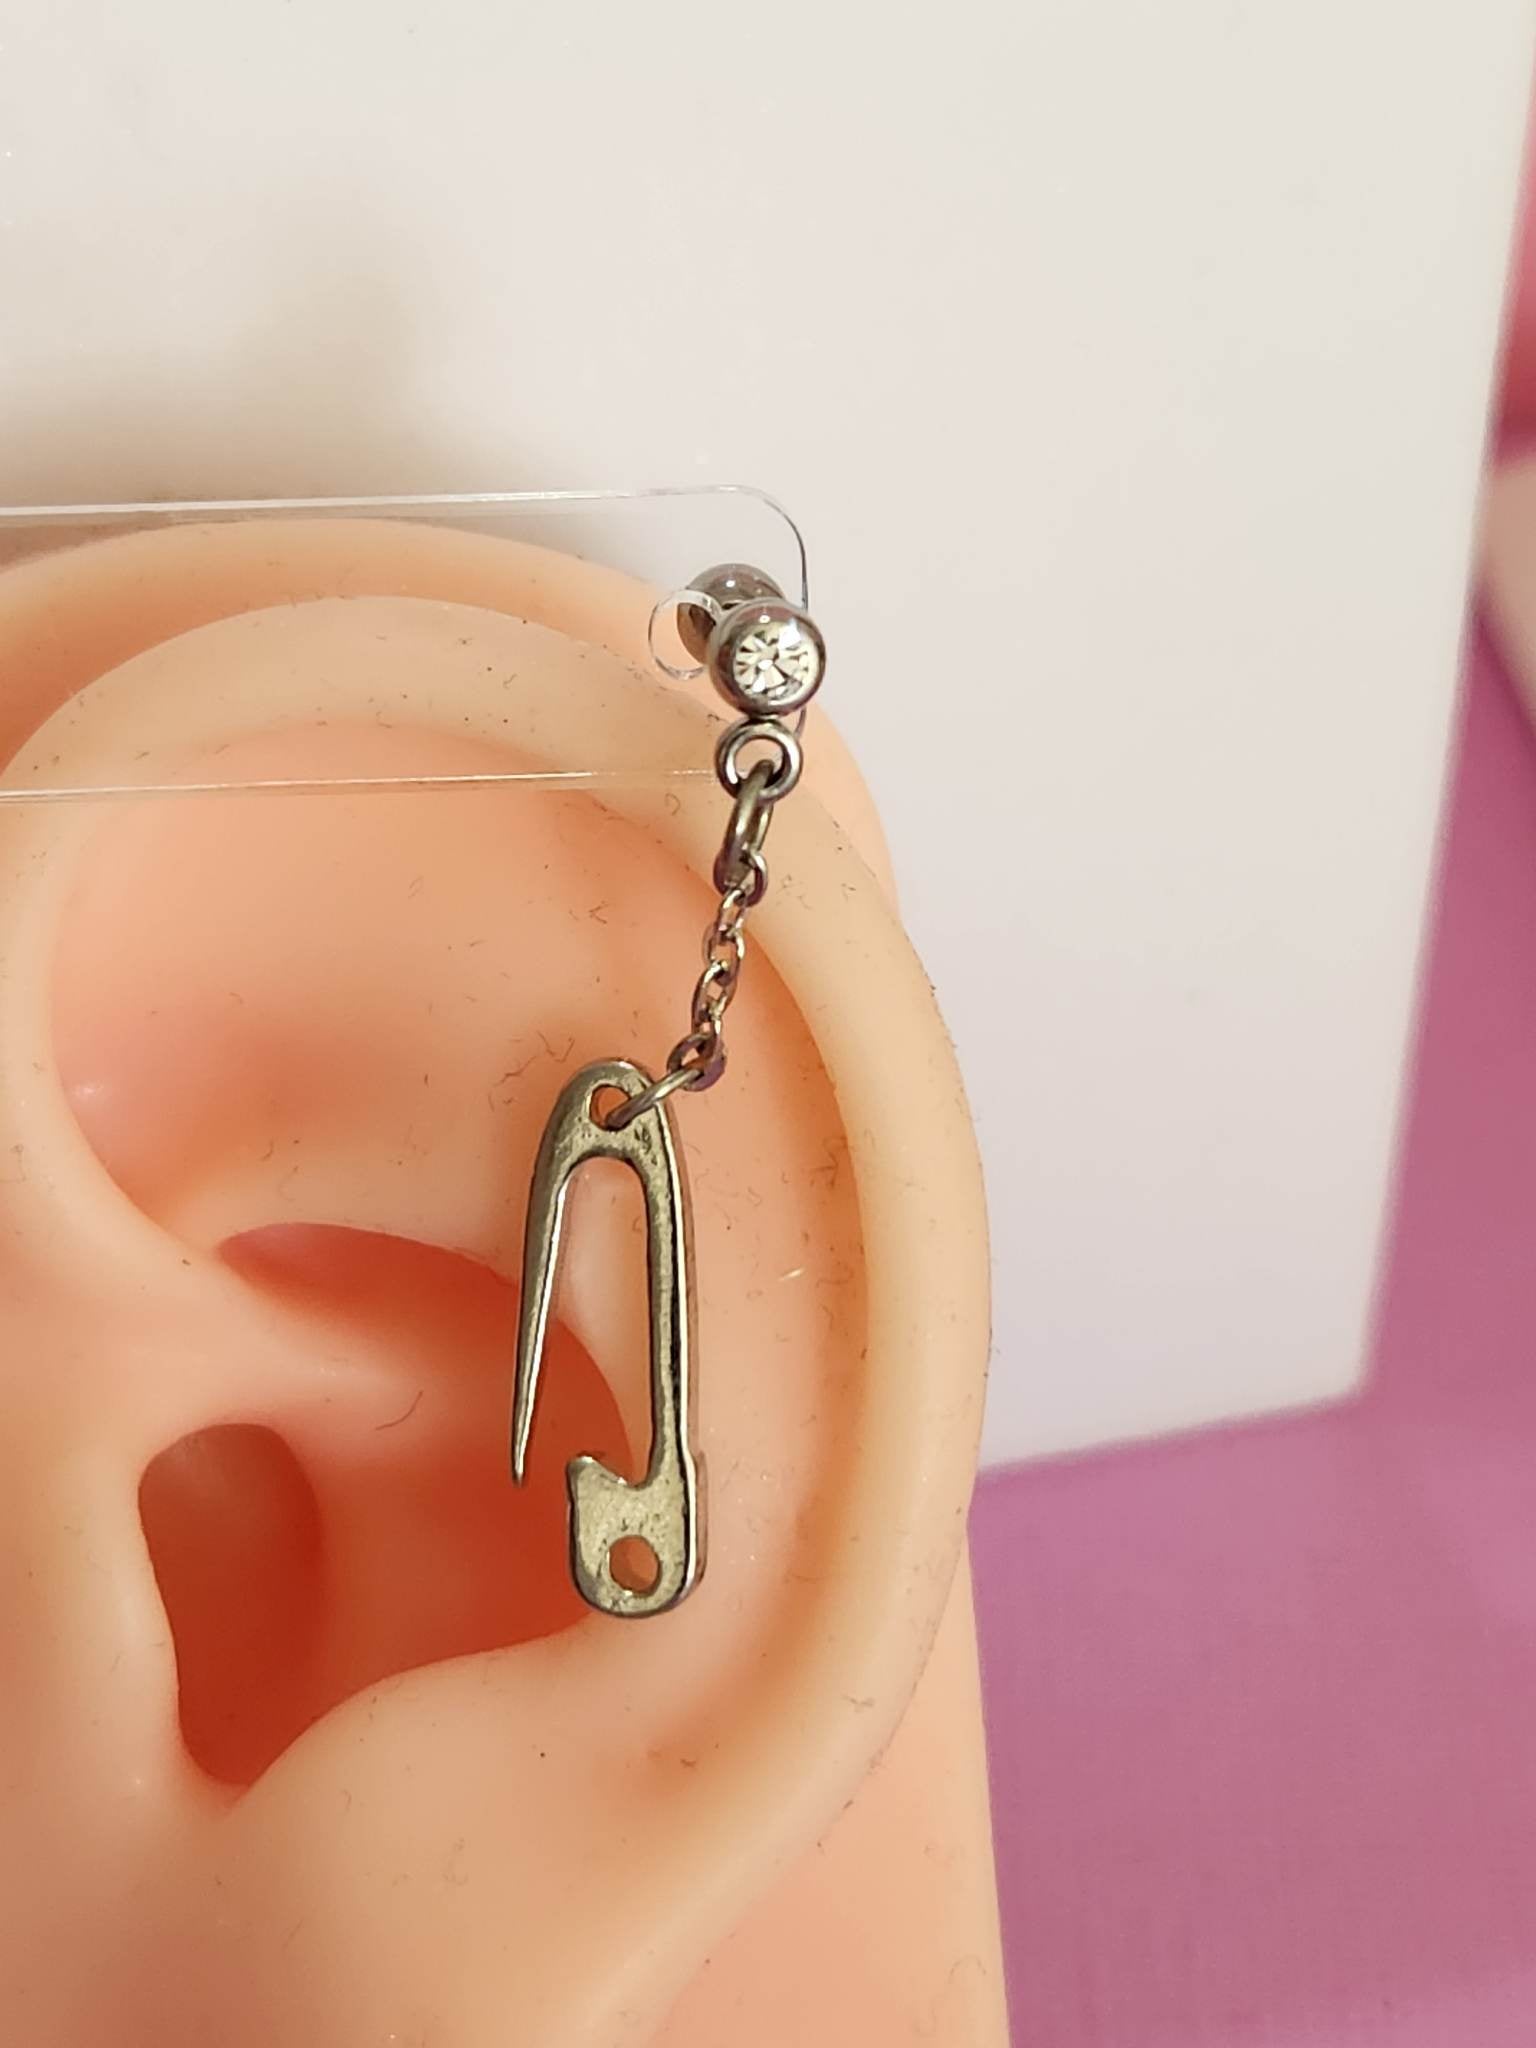 Pin Dangle Tragus Cartilage Ear Piercing Bars 16g 6mm - Pierced n Proud